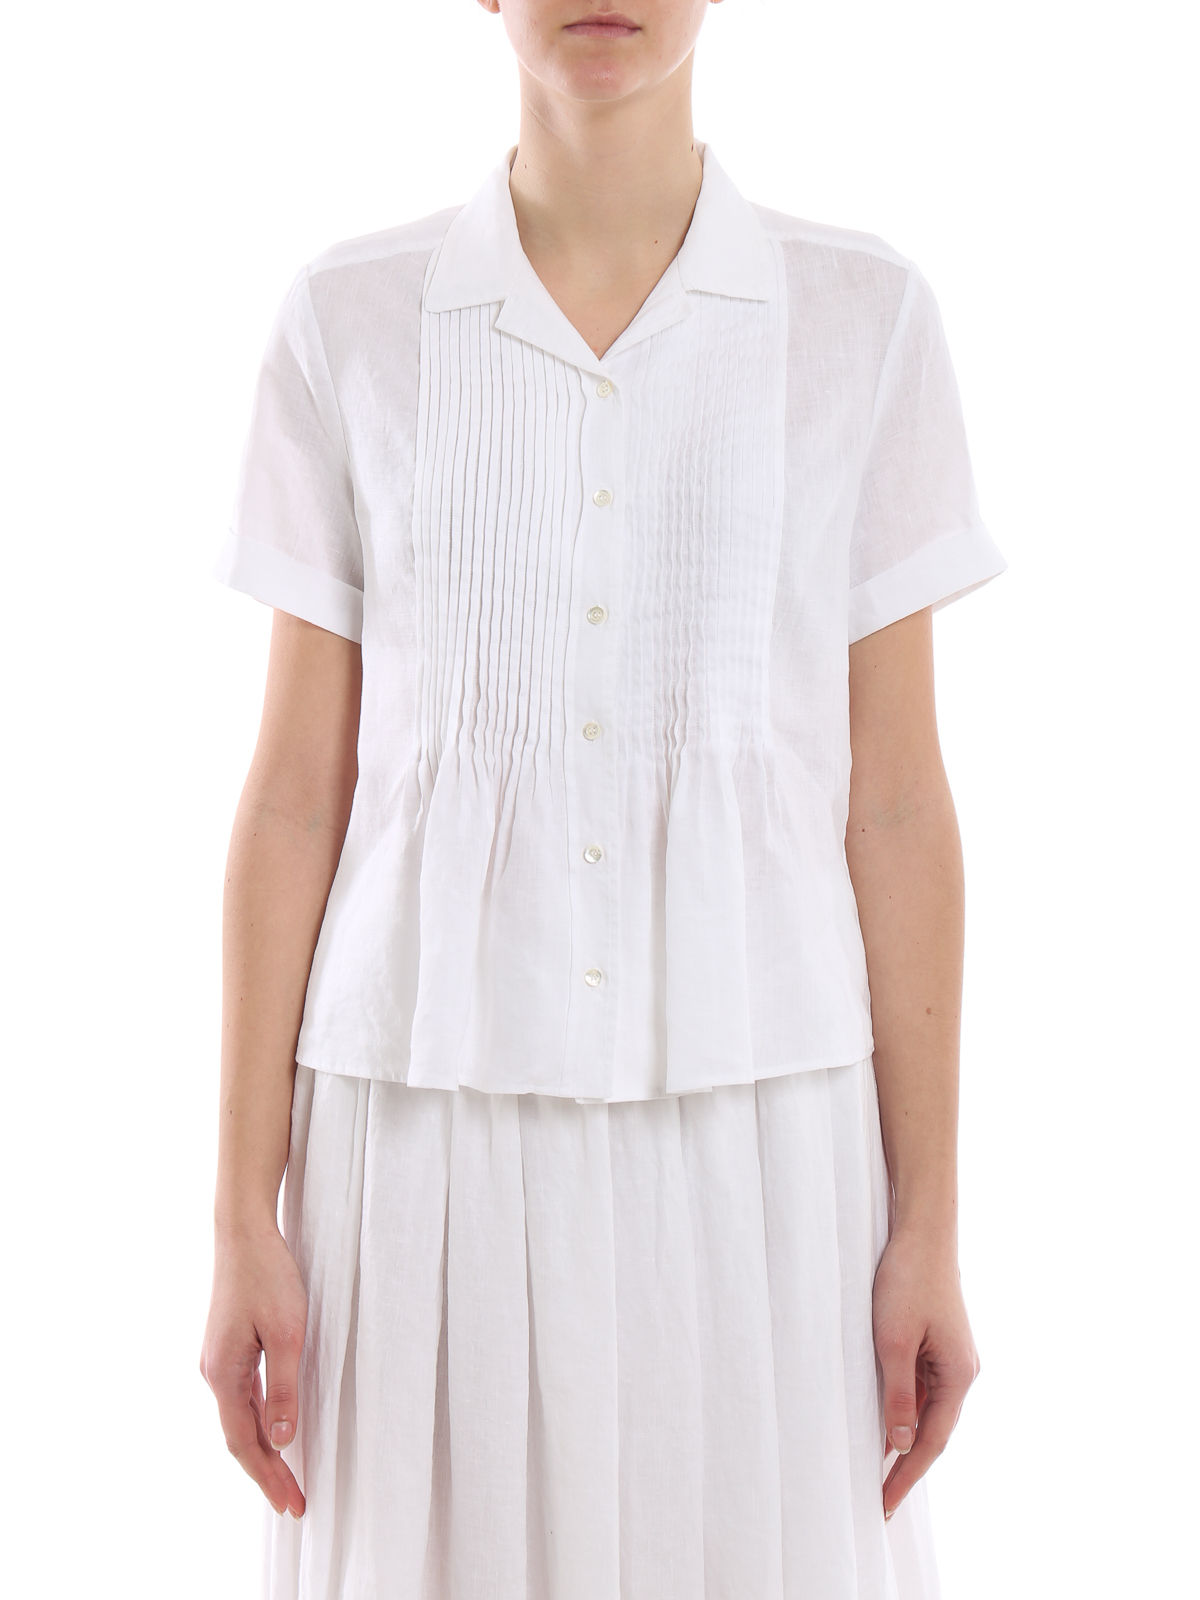 Save 65% Aspesi Linen Relaxed Fit Shirt in White Womens Tops Aspesi Tops 